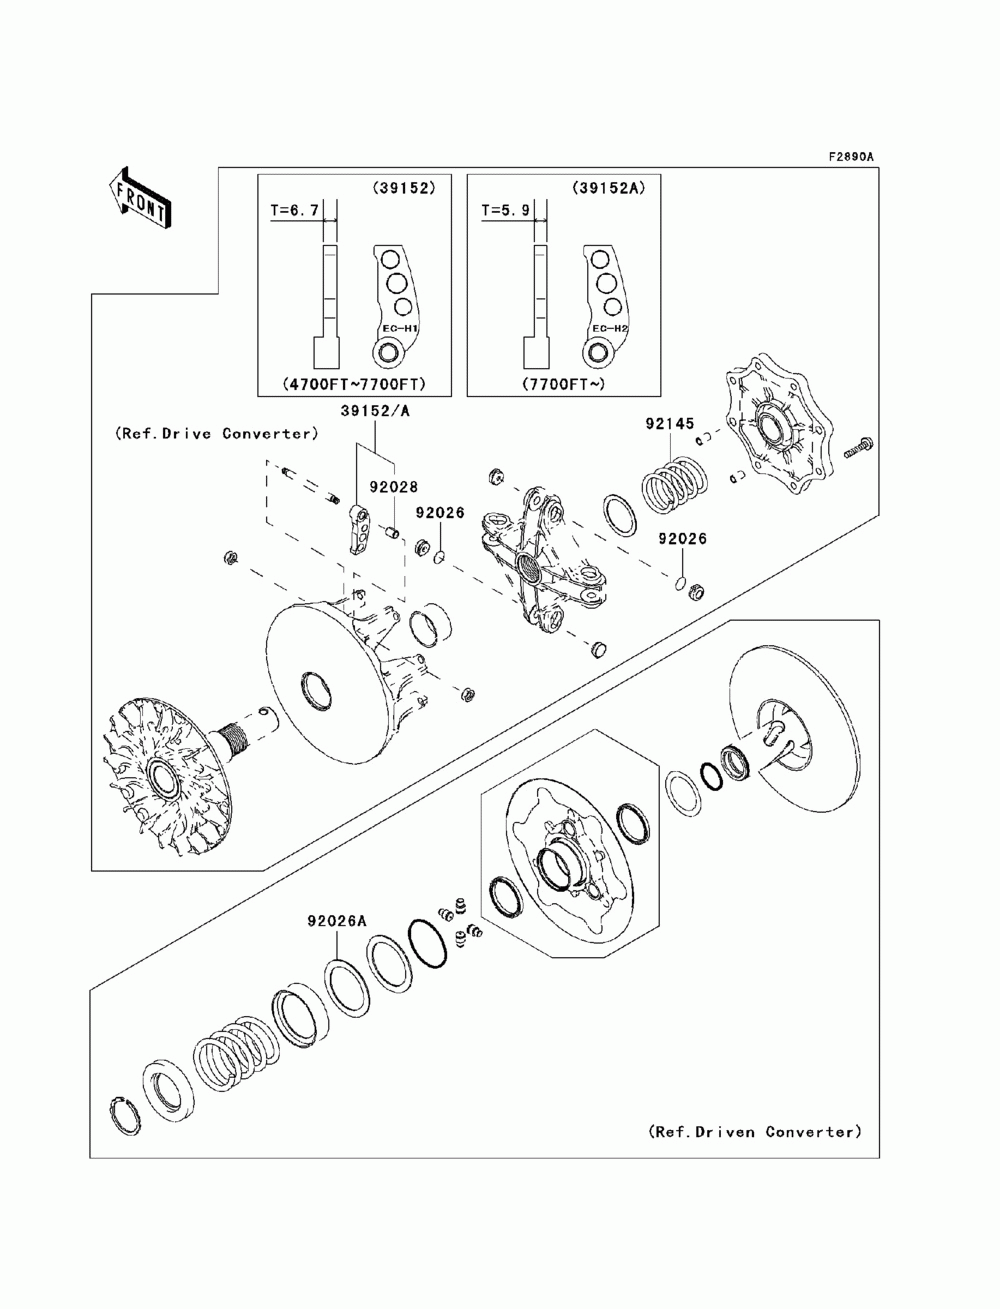 Optional parts(converter)